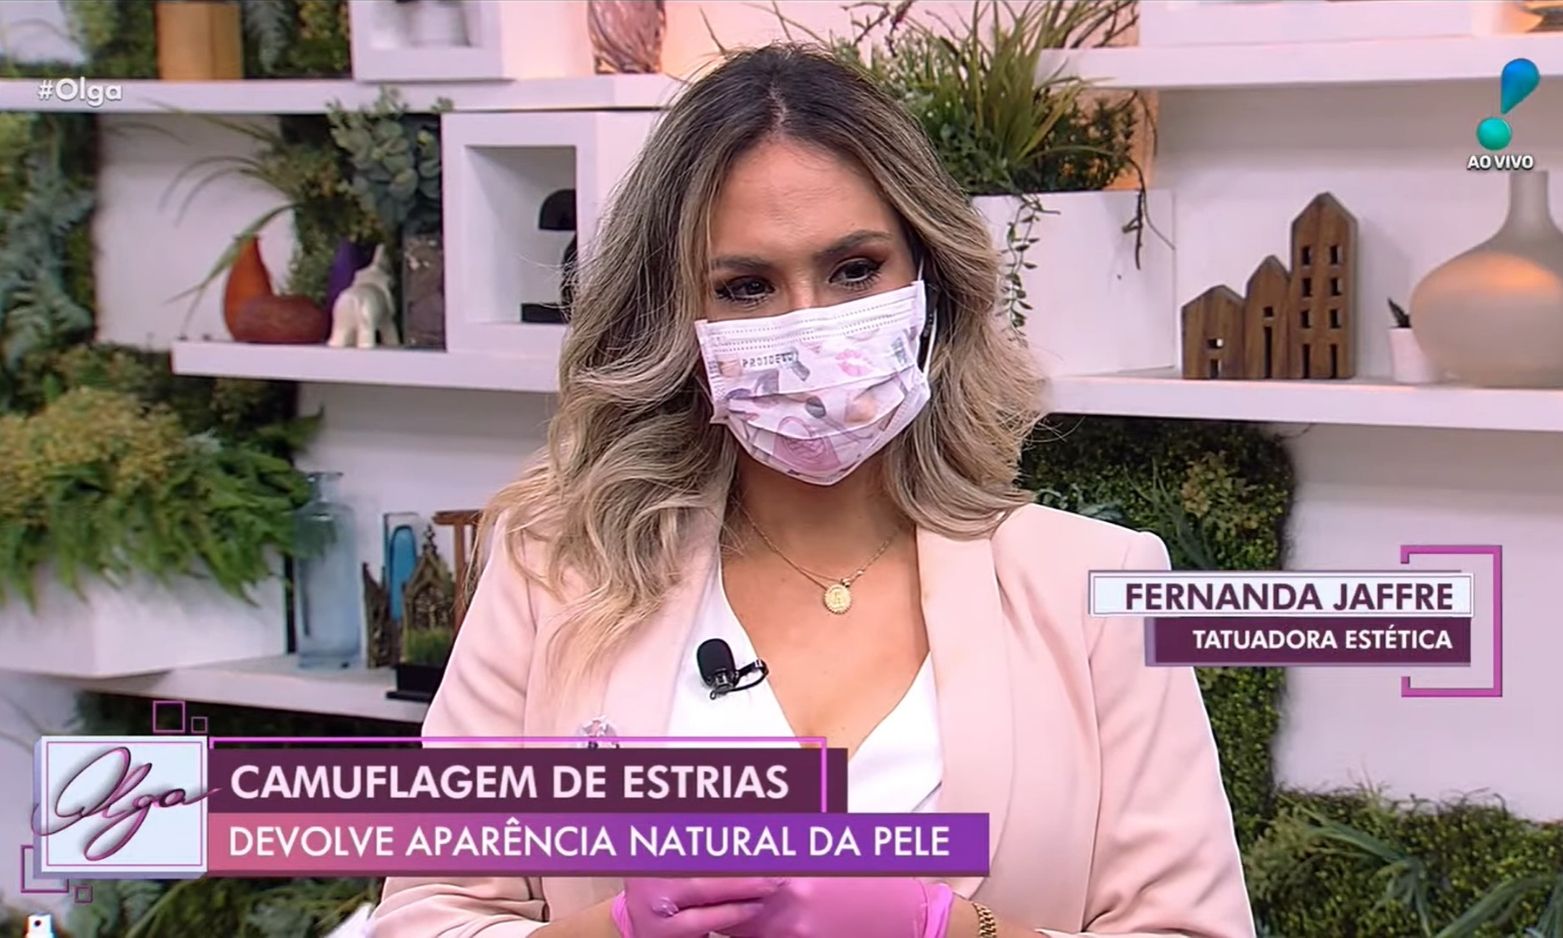 Fernanda Jaffre was invited to discuss the technique on a Brazilian television program. Rede Tv.